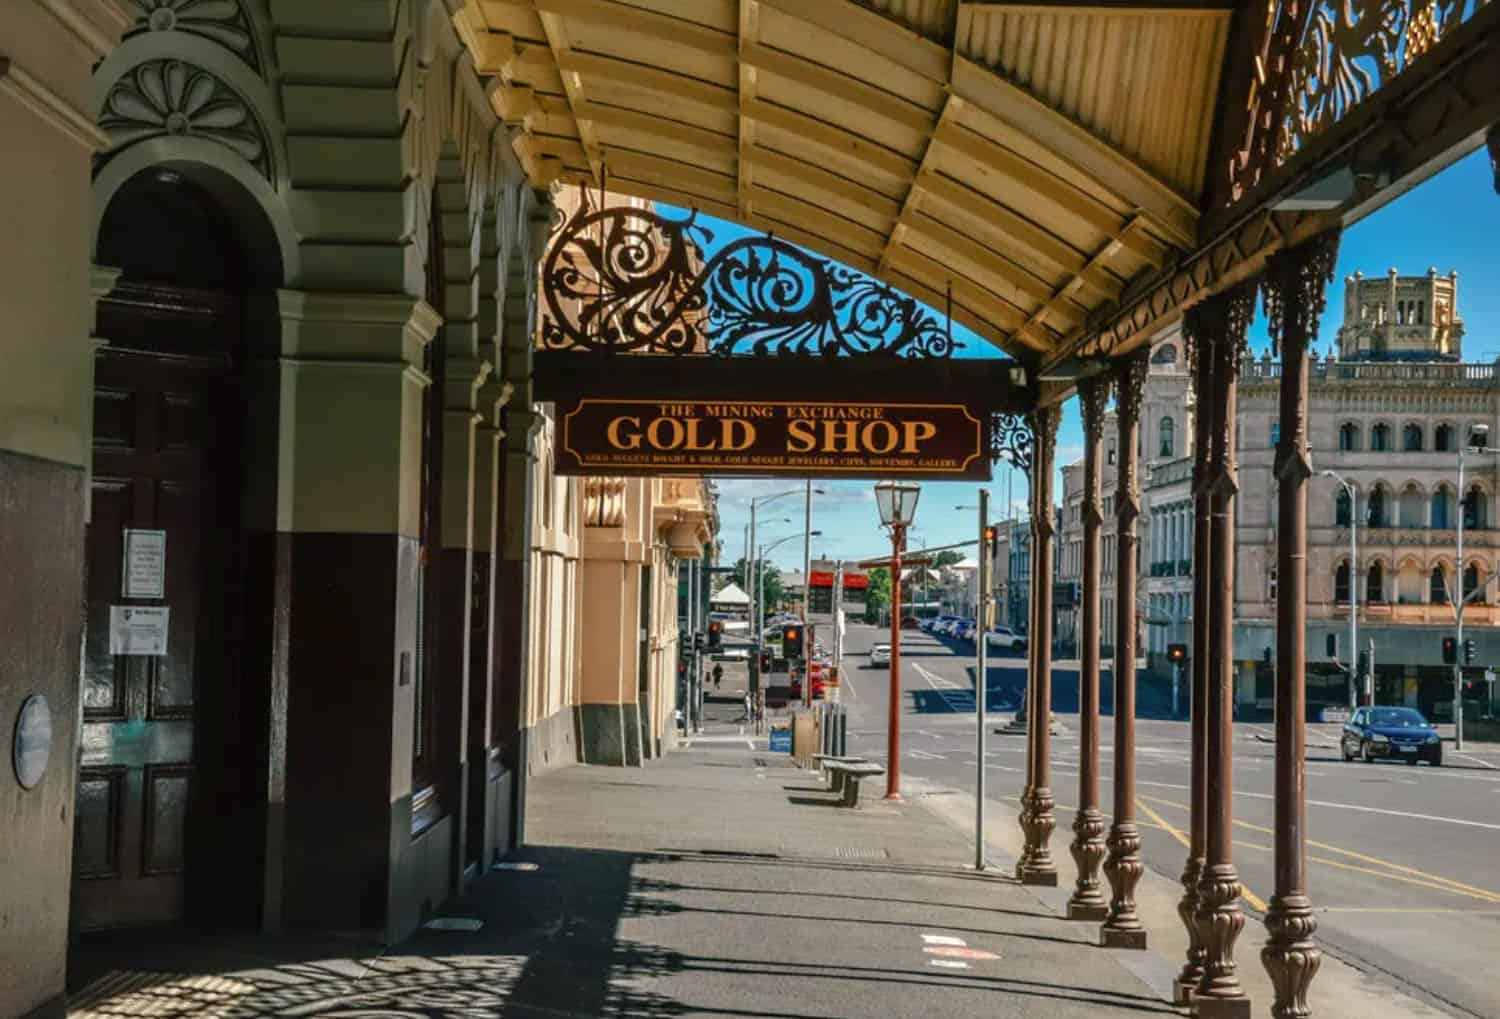 Ballarat gold rush town near Melbourne, Victoria